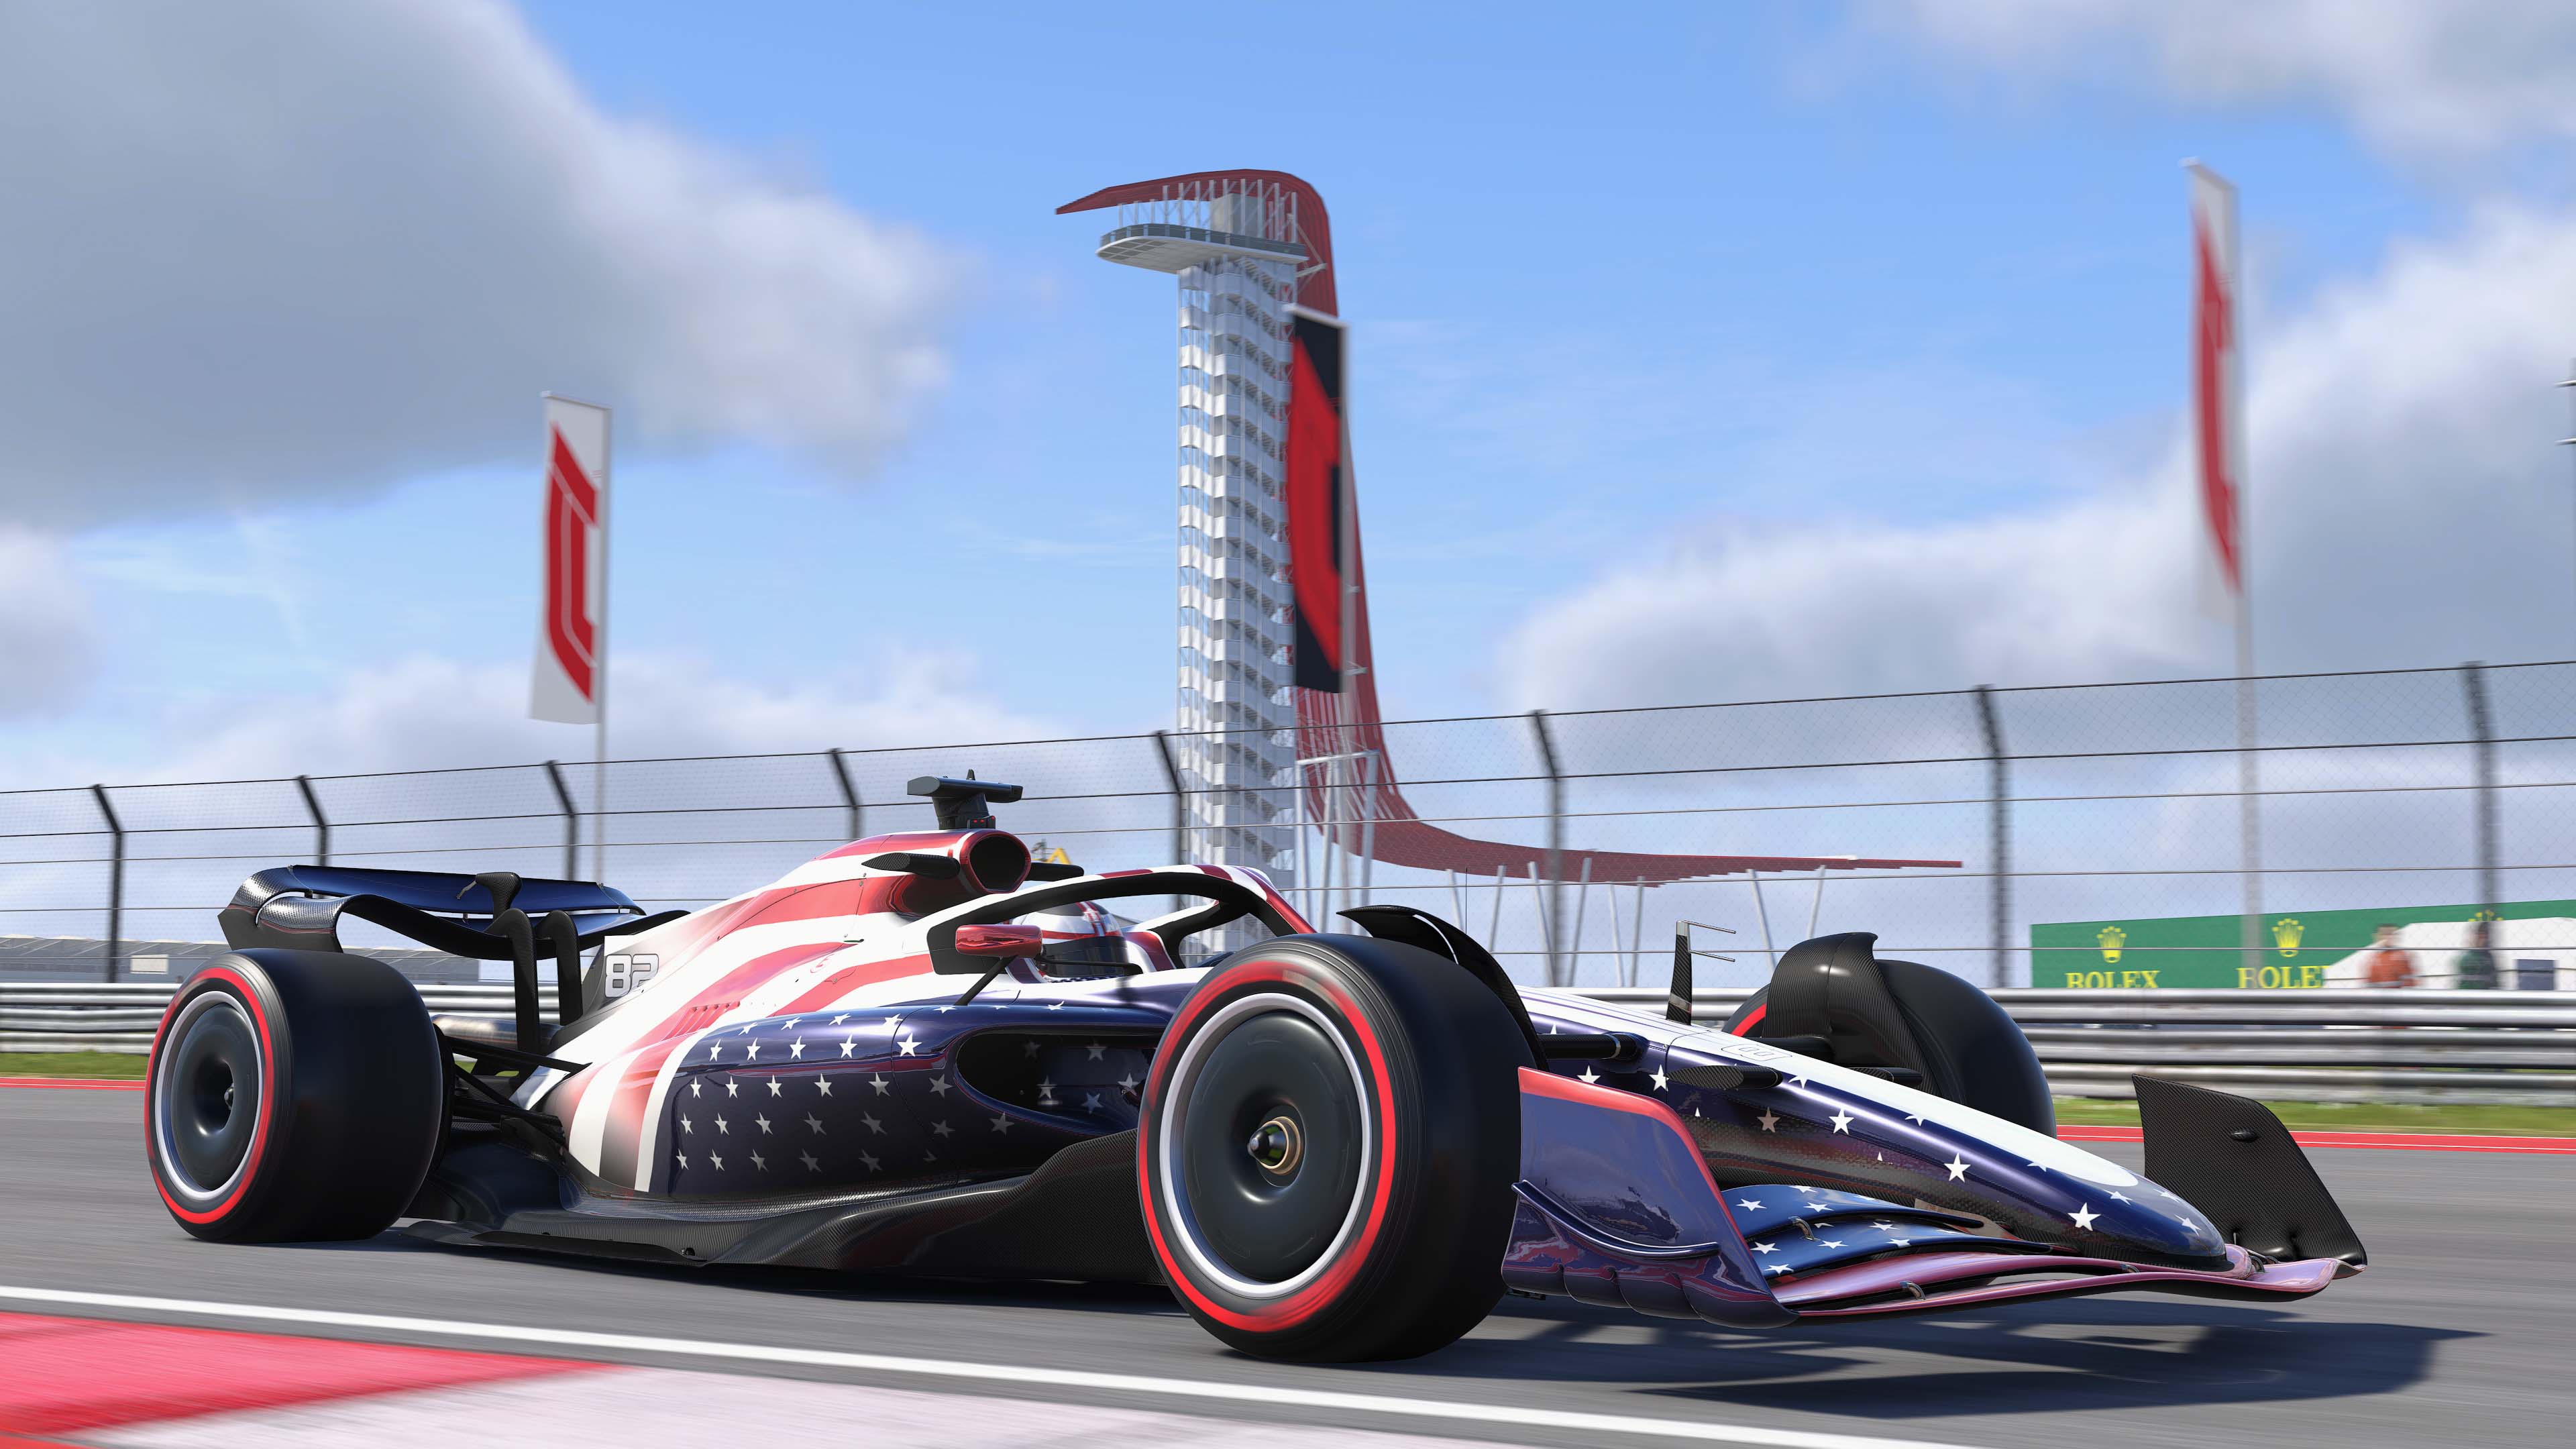 F1 2022 - PS5, PlayStation 5